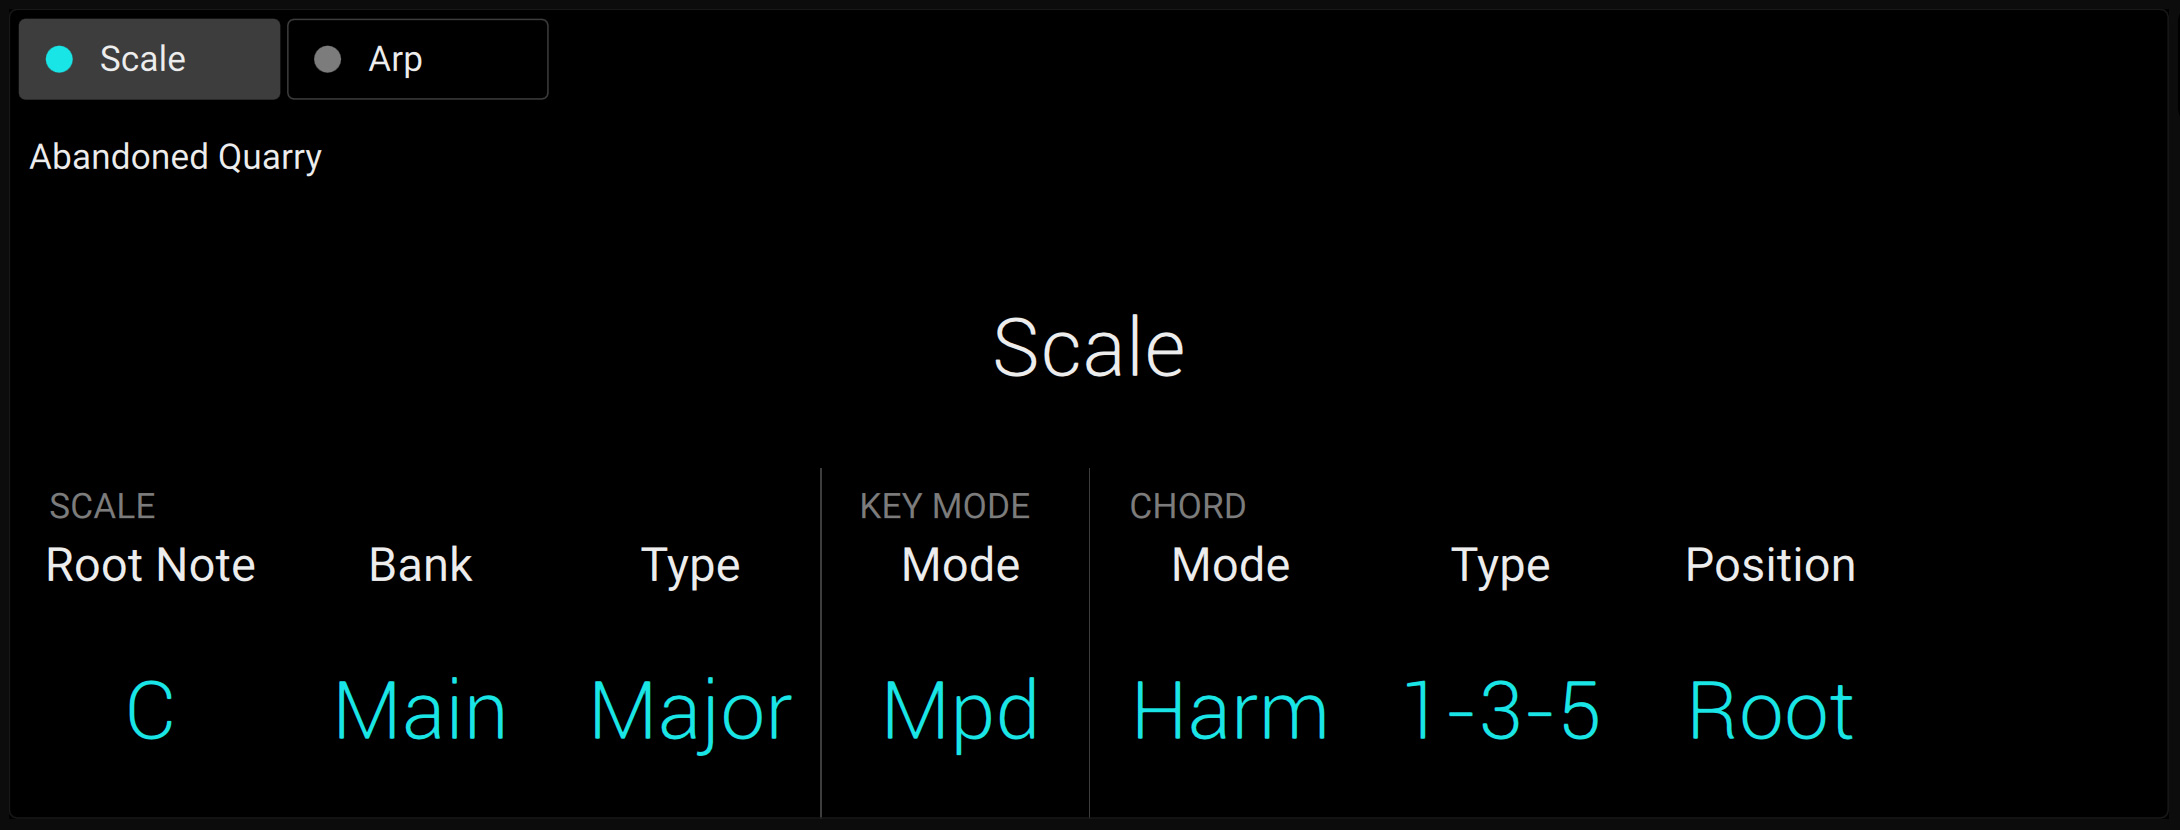 KS-MK3_D_PlayAssist-Scale.jpg